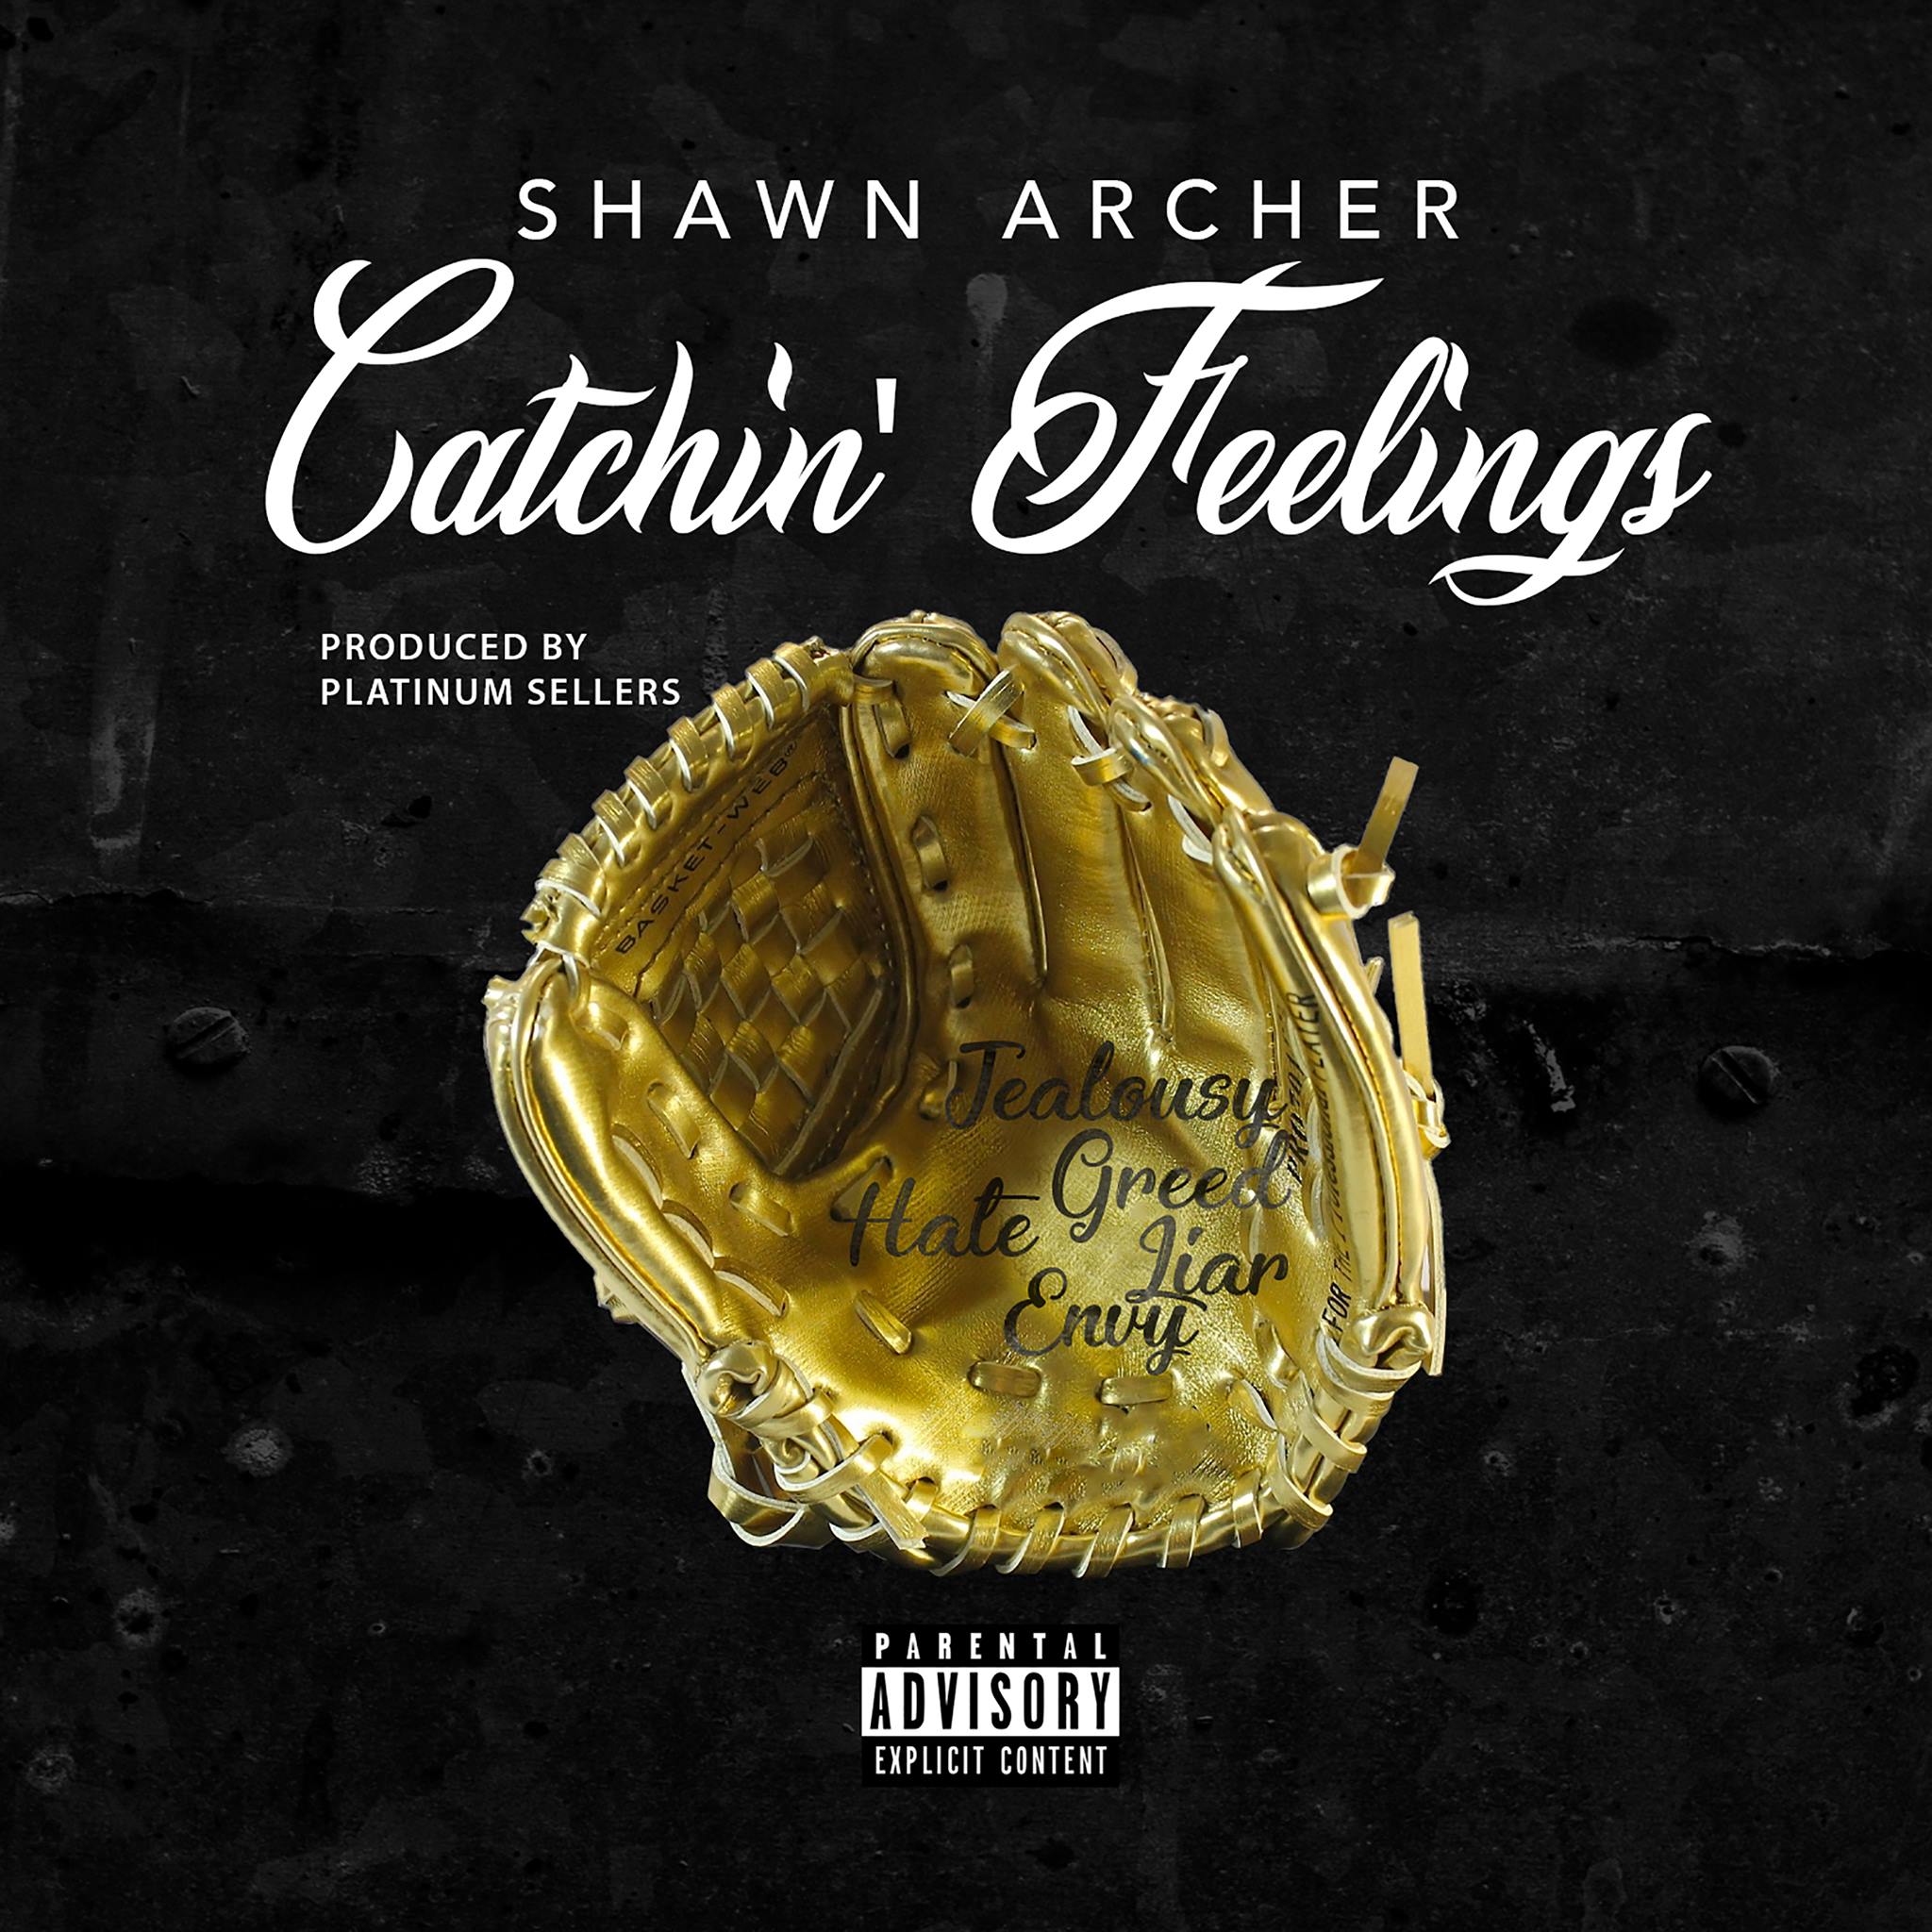 New Shawn Archer “Catchin’ Feelings” @iamshawnarcher